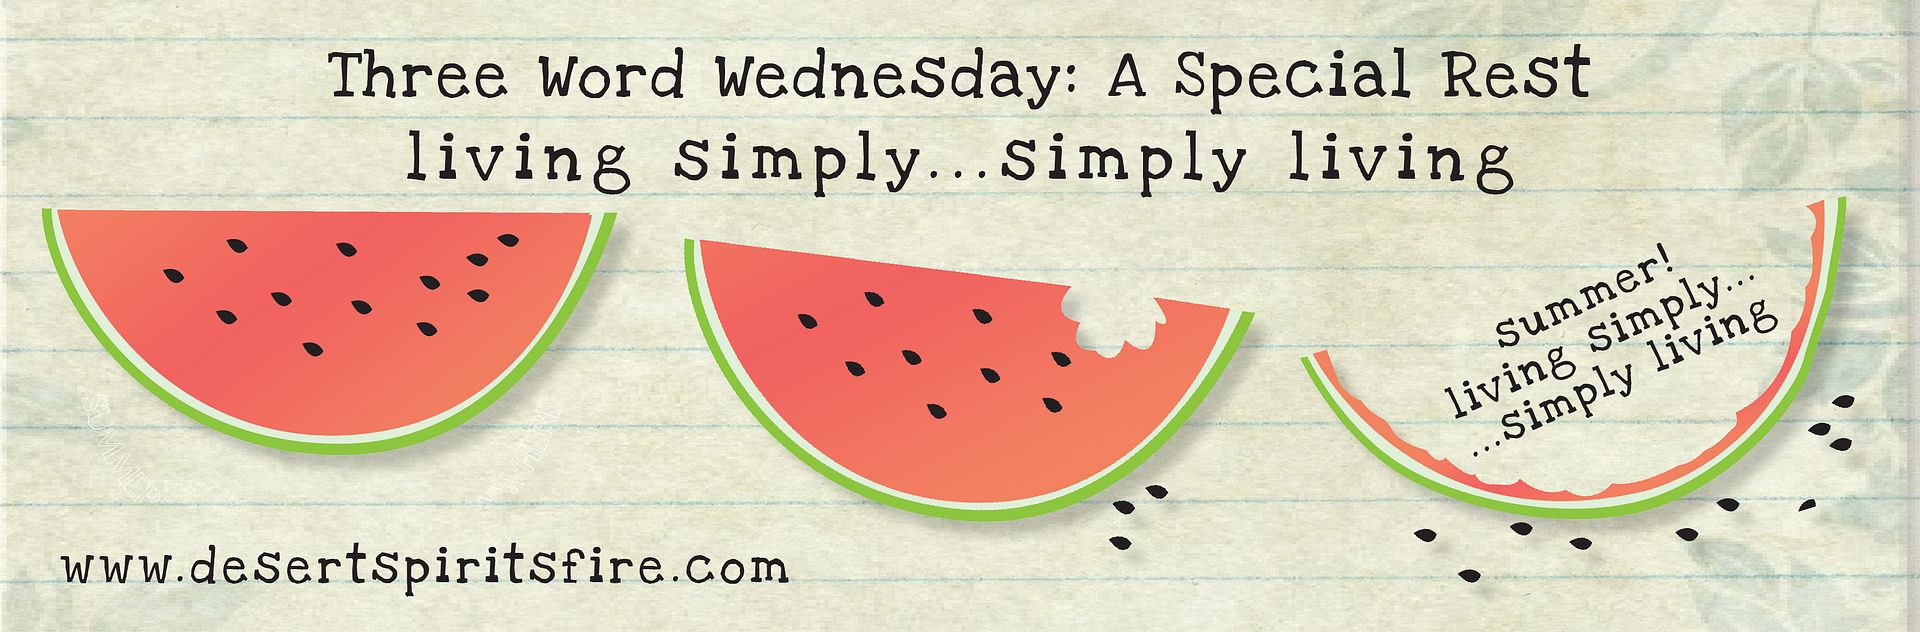 three word wednesday watermelon banner